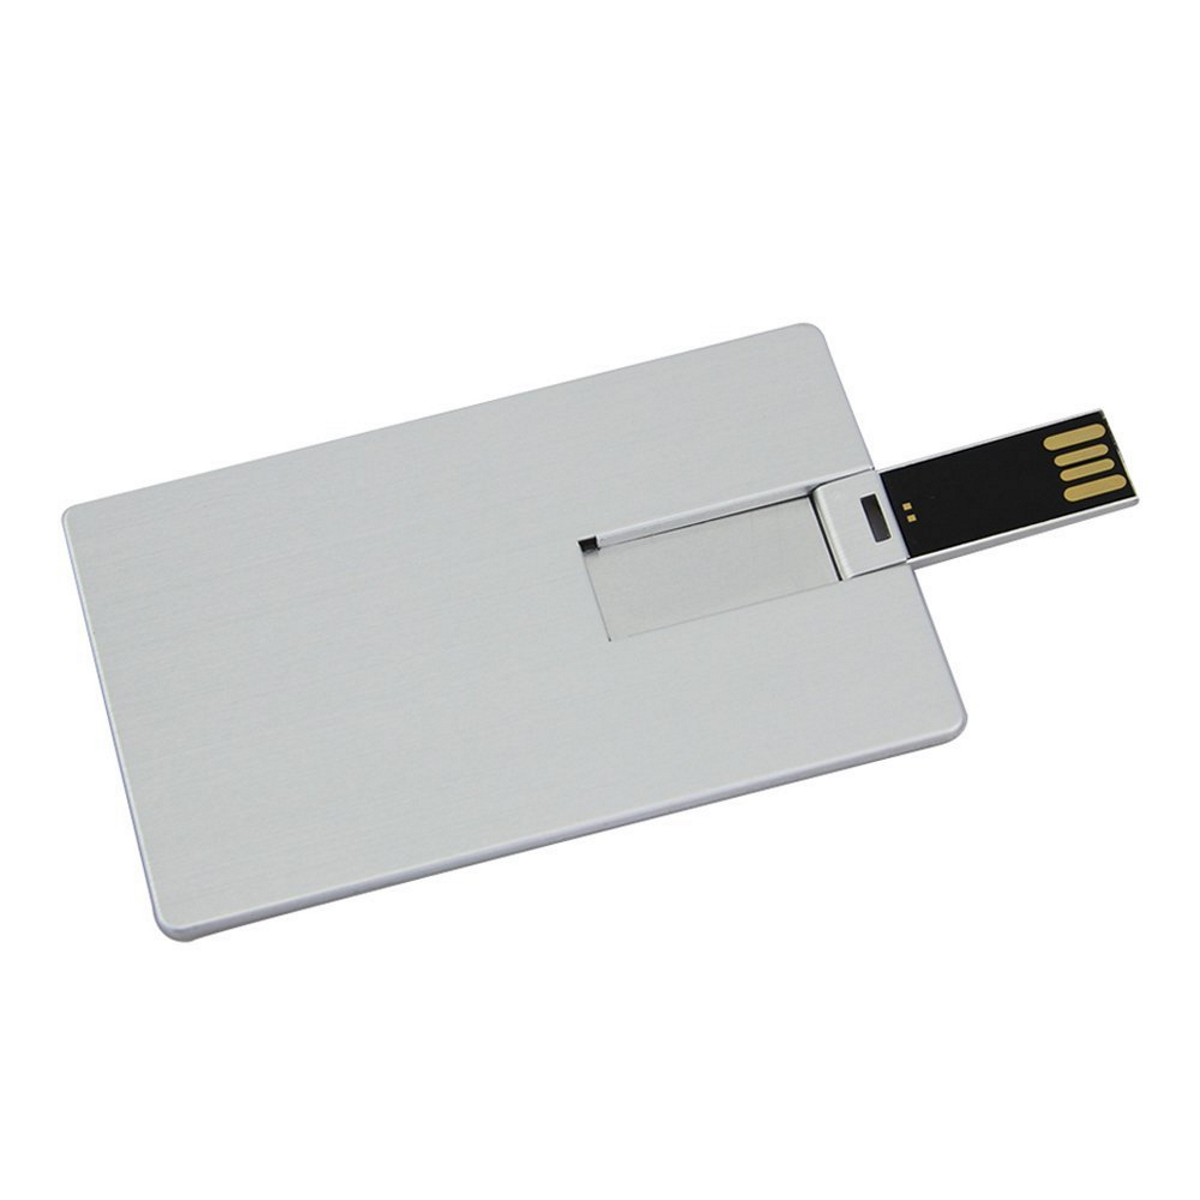 GB) Metall-Kreditkarte 8 ® (Silber, GERMANY USB-Stick USB